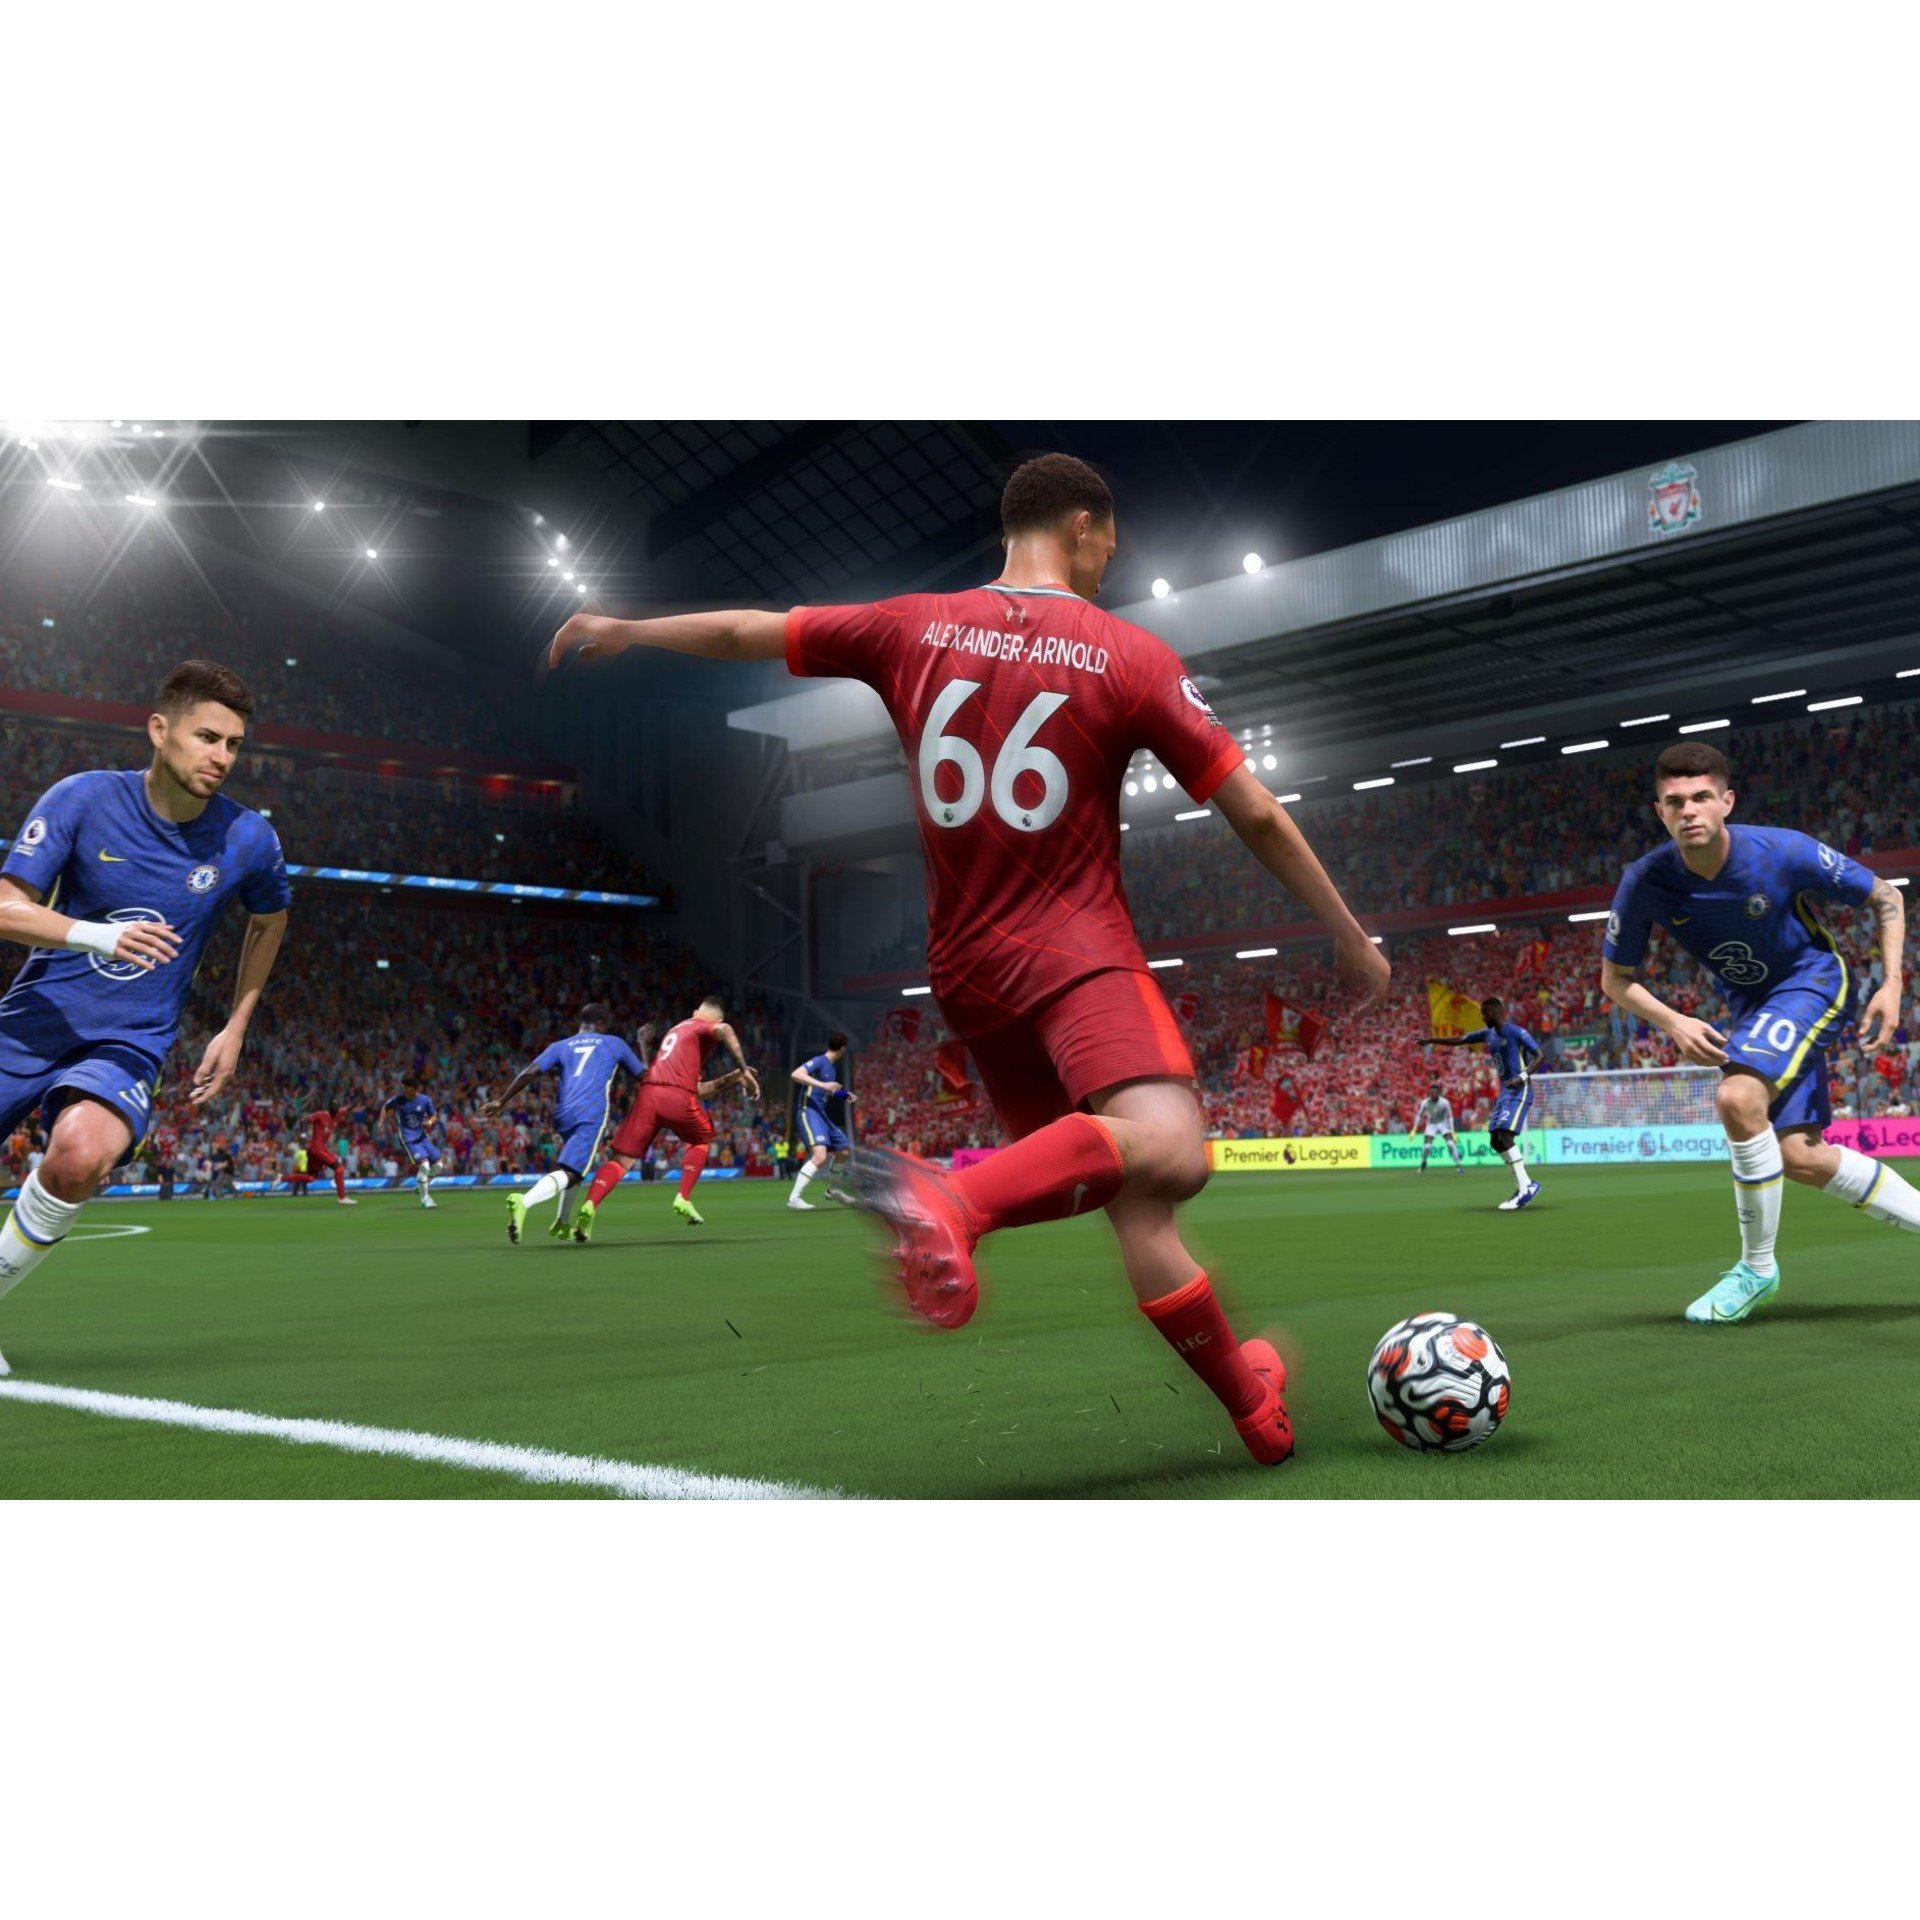 Игра Electronic Arts FIFA 22 (XBOX ONE)